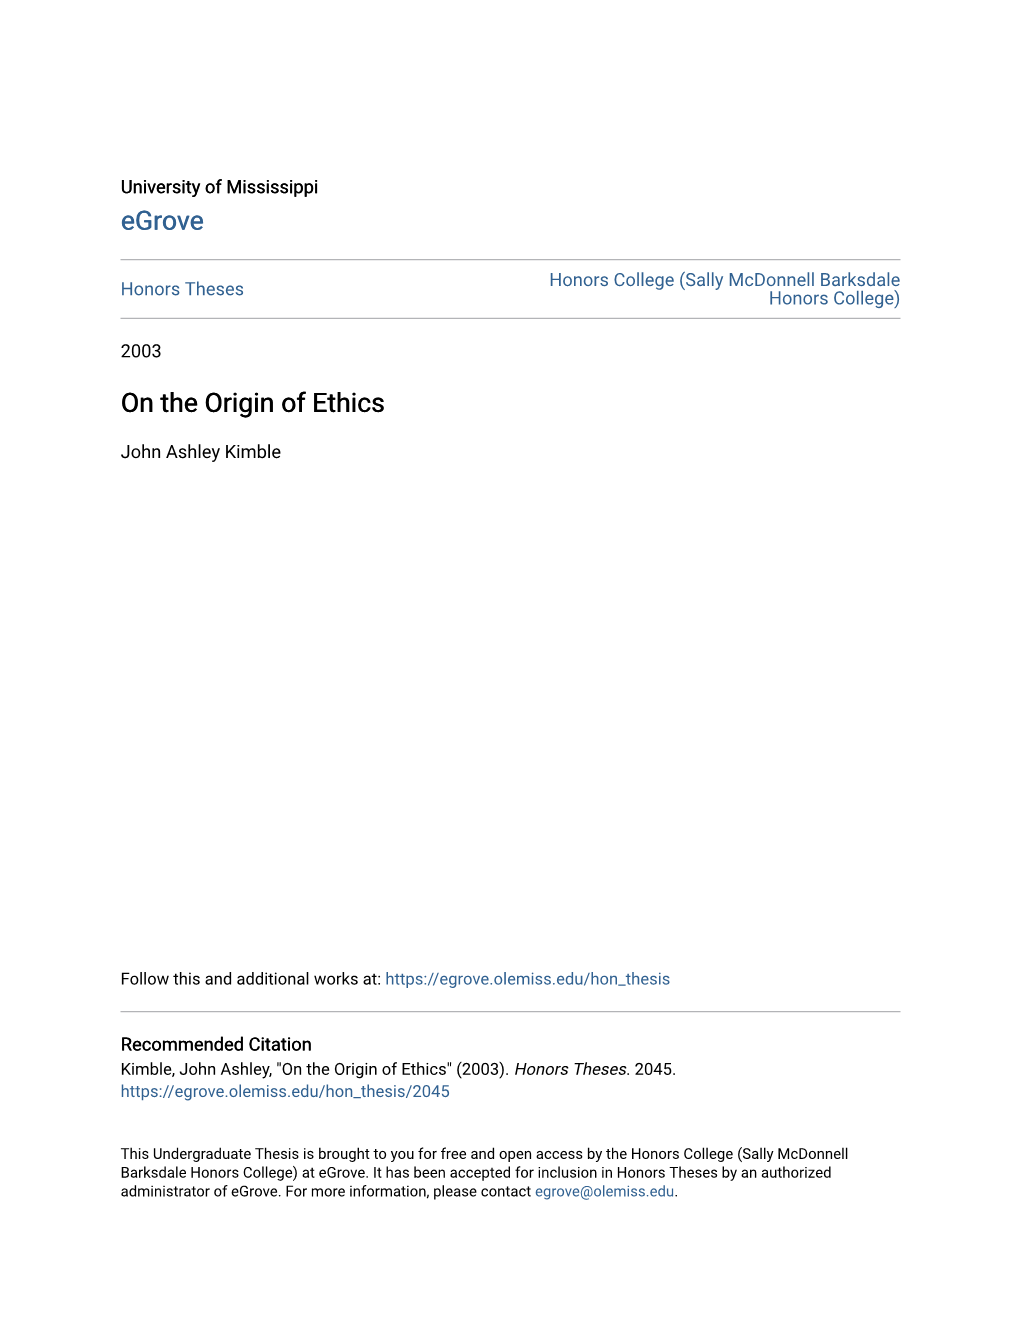 On the Origin of Ethics